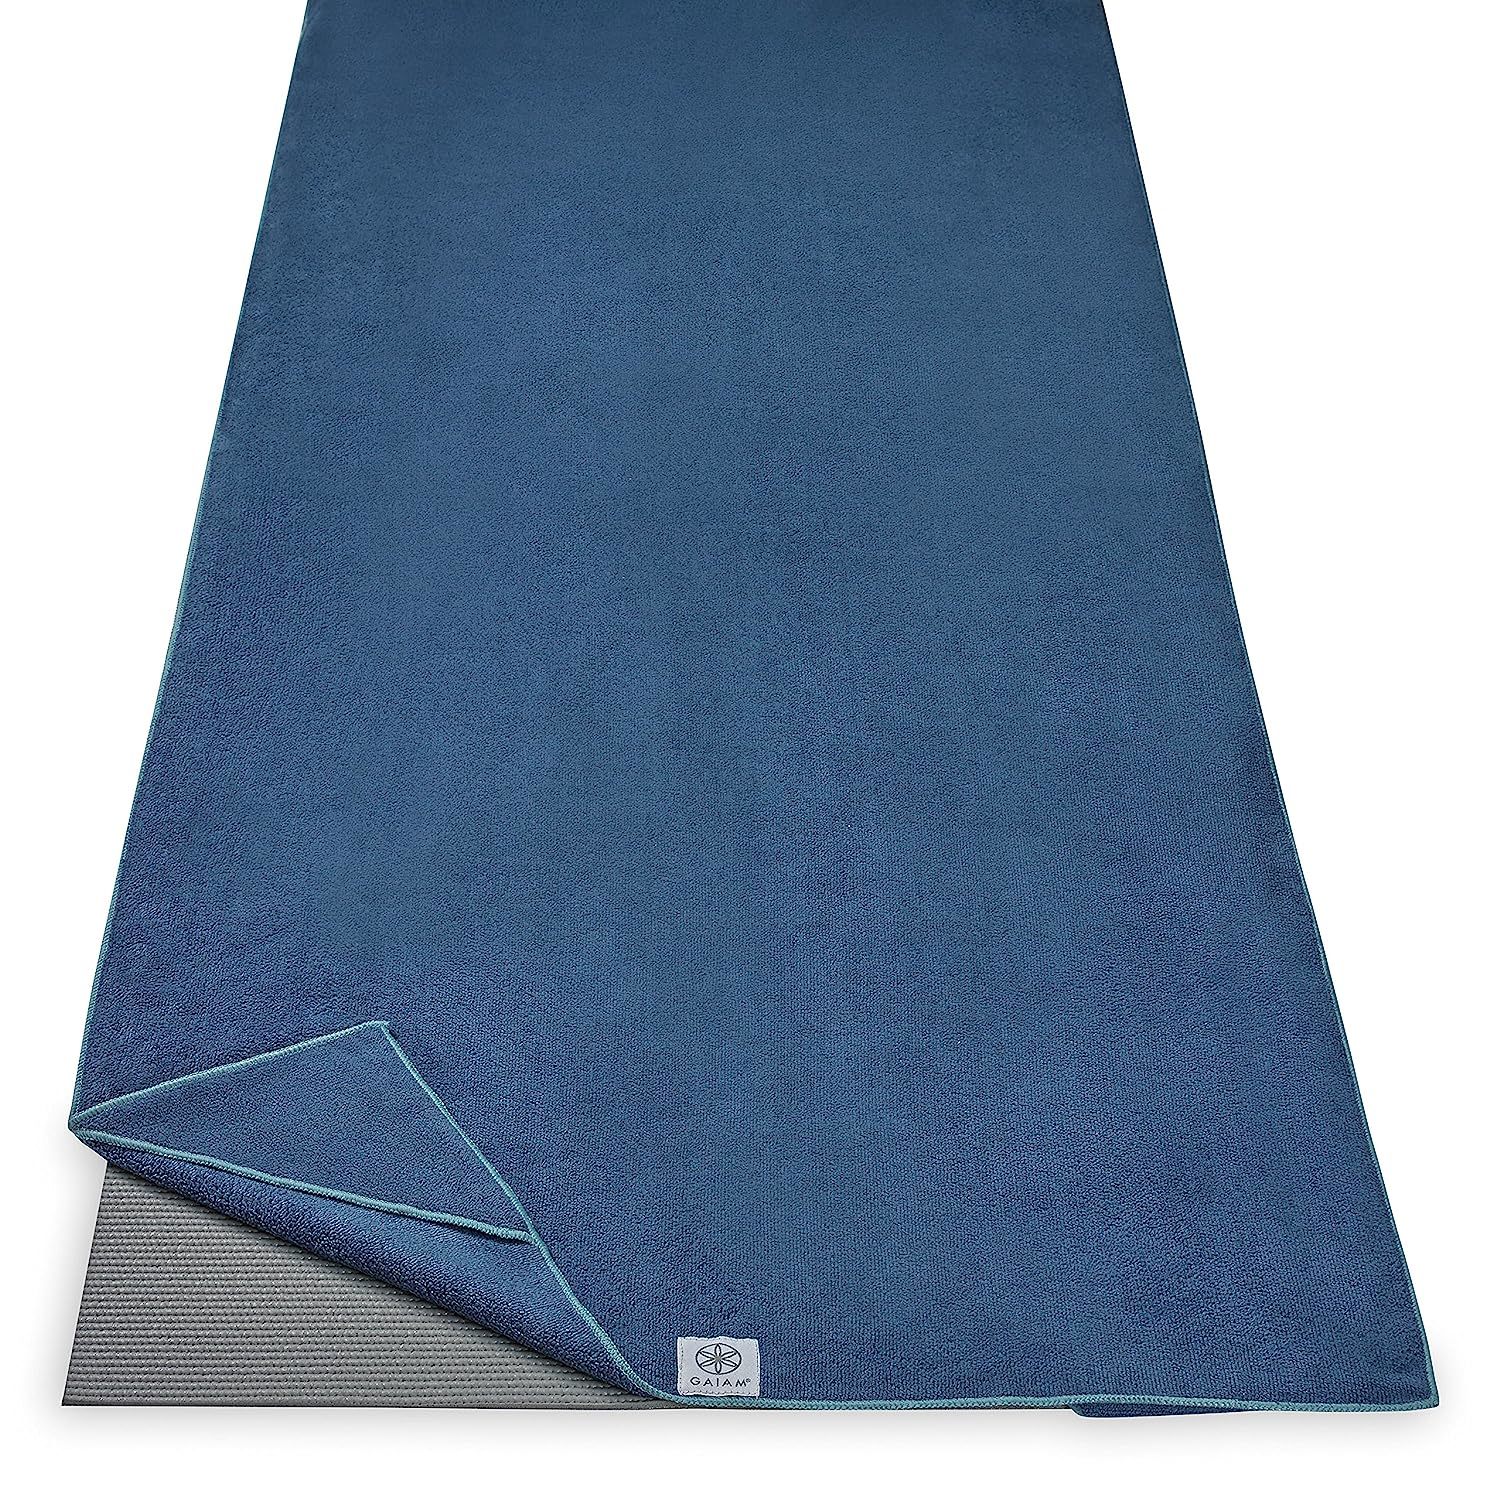 Gaiam Stay Put Yoga Towel Mat Size Yoga Mat and 34 similar items